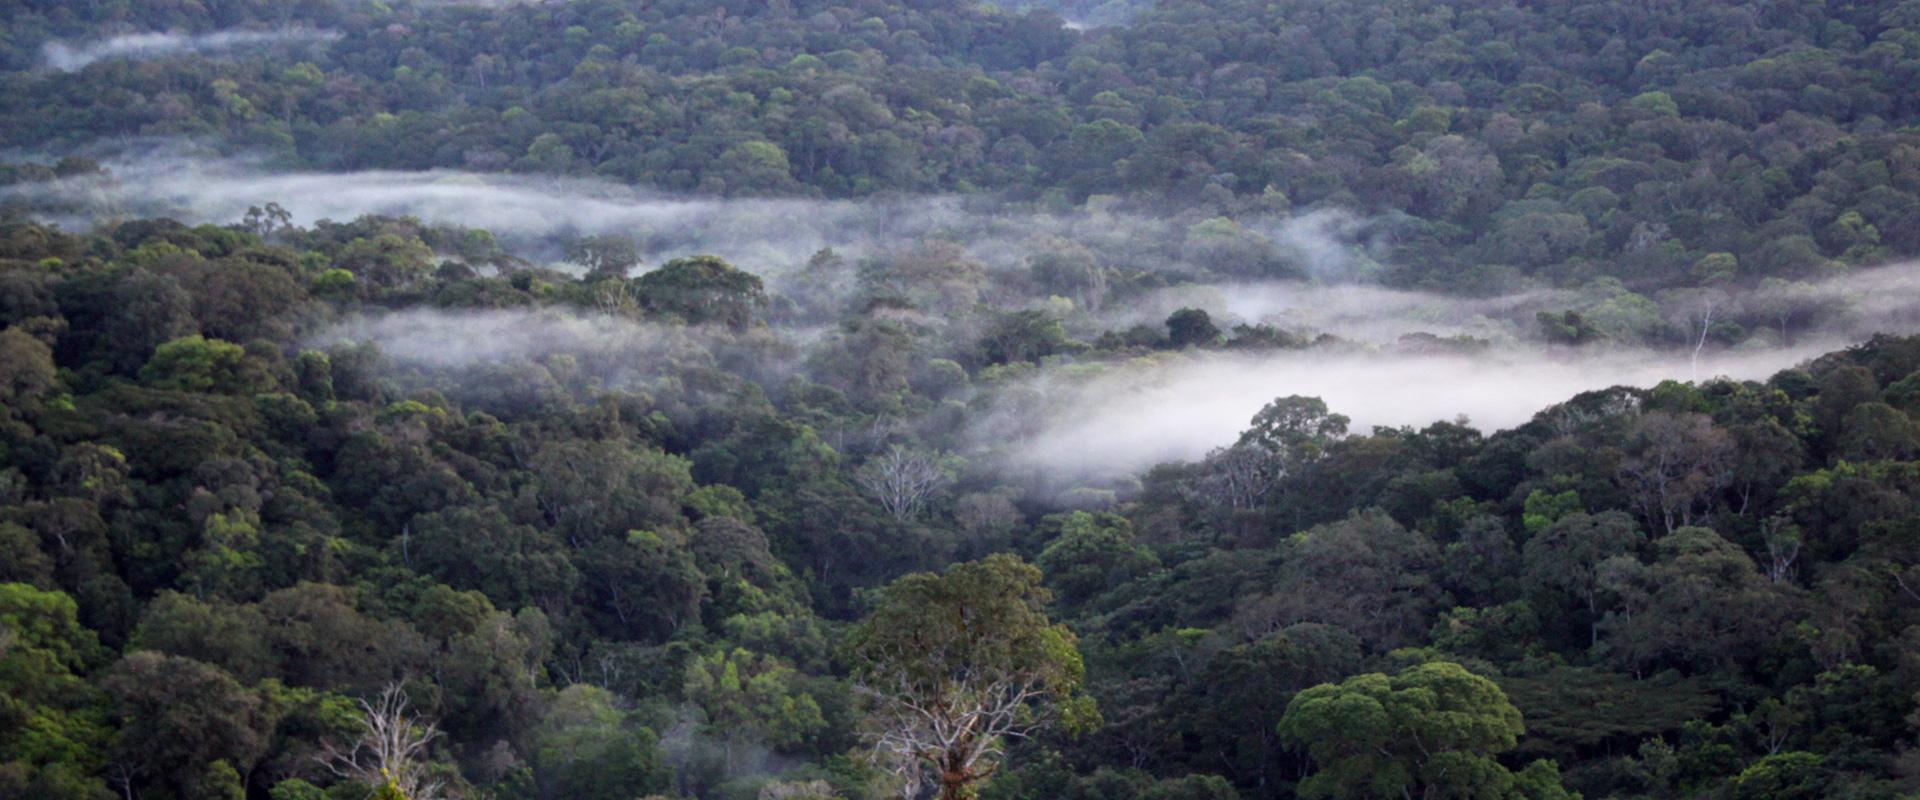 Forêt amazonienne, Guyane